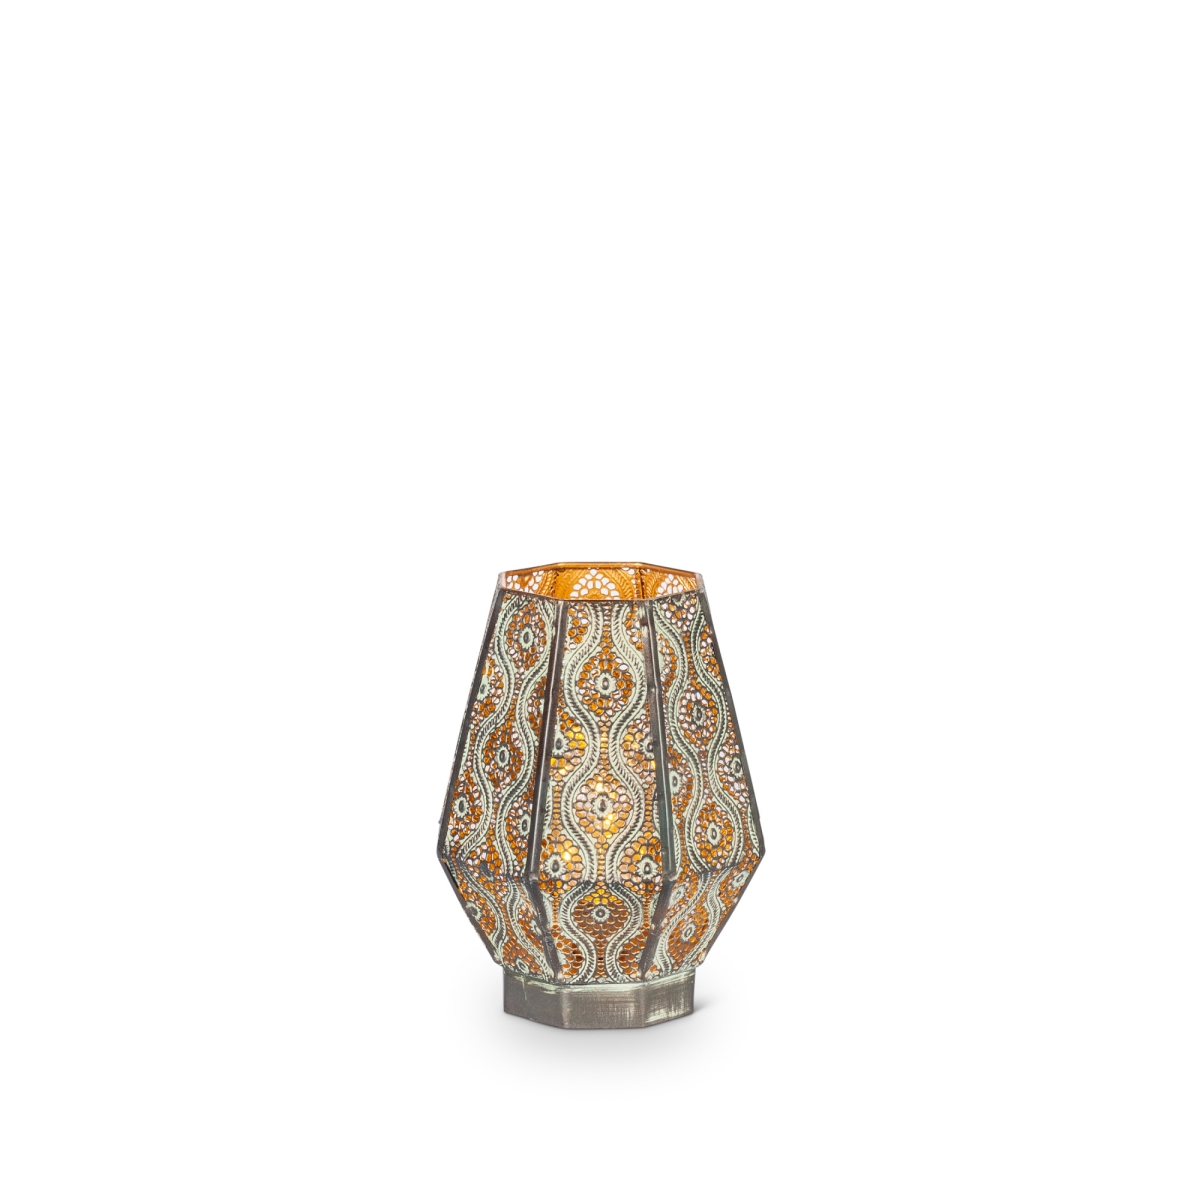 Gerson 44621ec 9 In. Antique Patterned Metal Lantern With Gold Interior, 15 Led Light String & Timer - Multi Color - Set Of 2